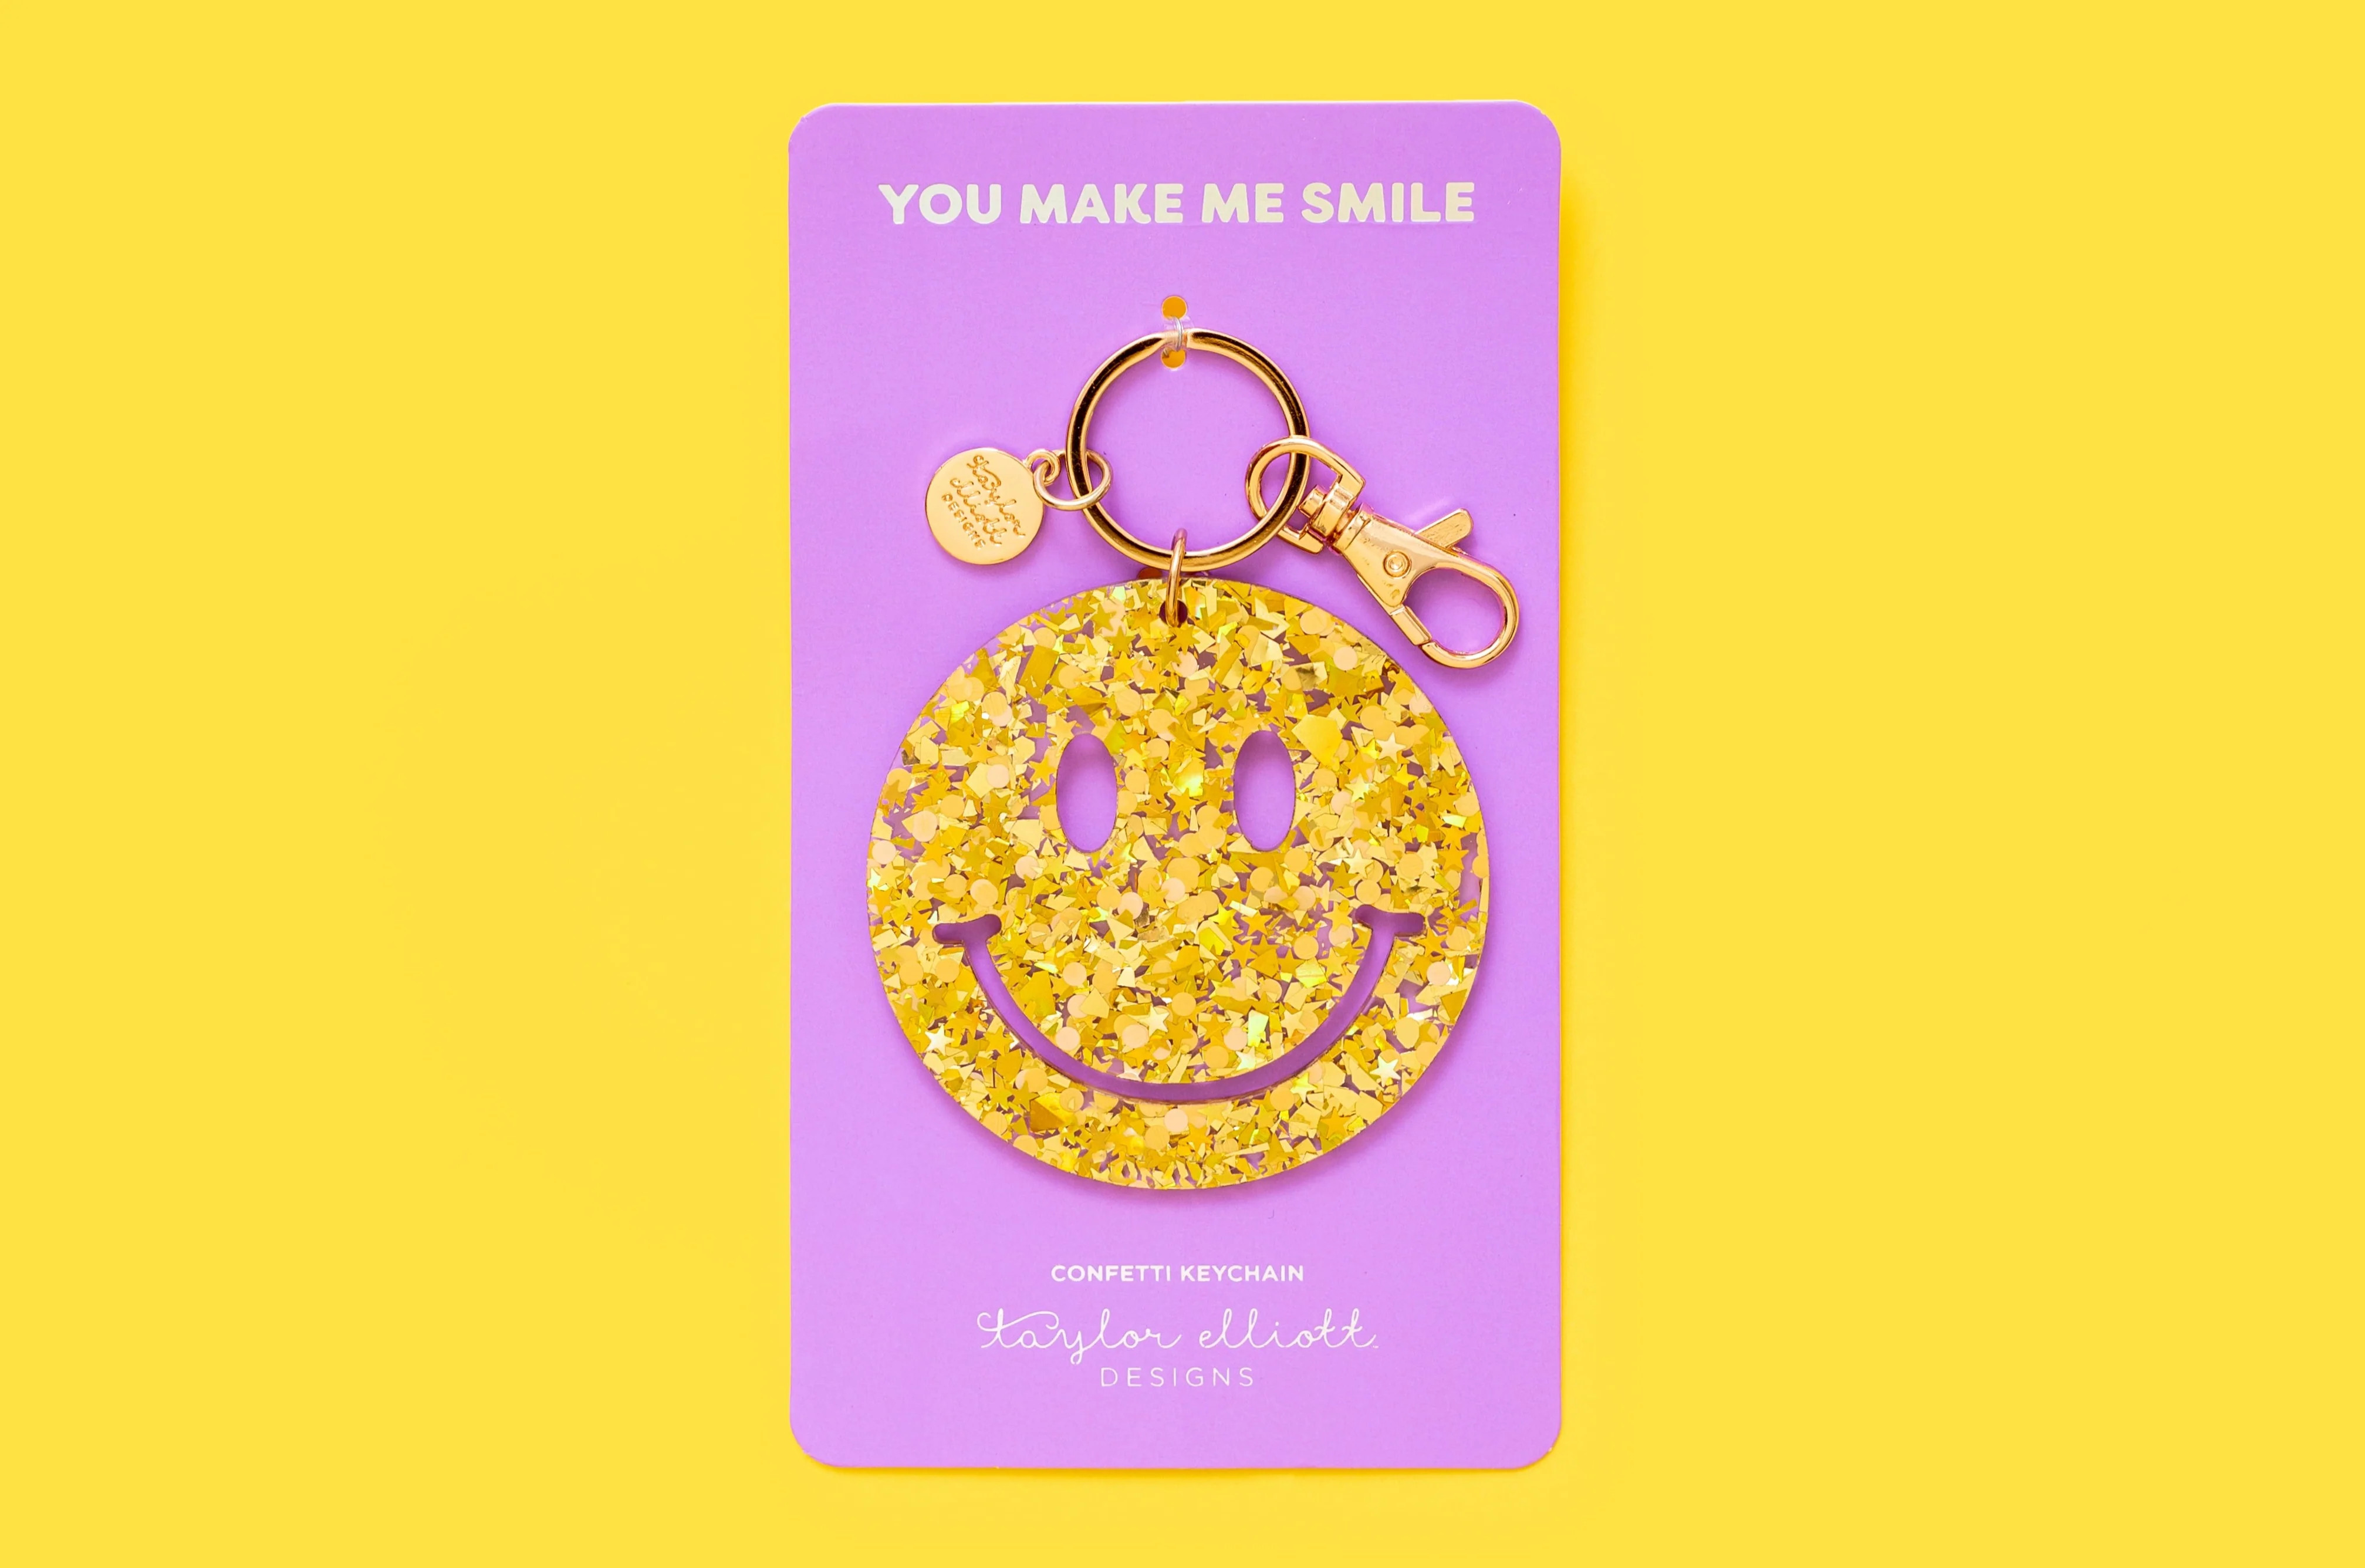 Confetti Smiles Keychain | Taylor Elliott Designs